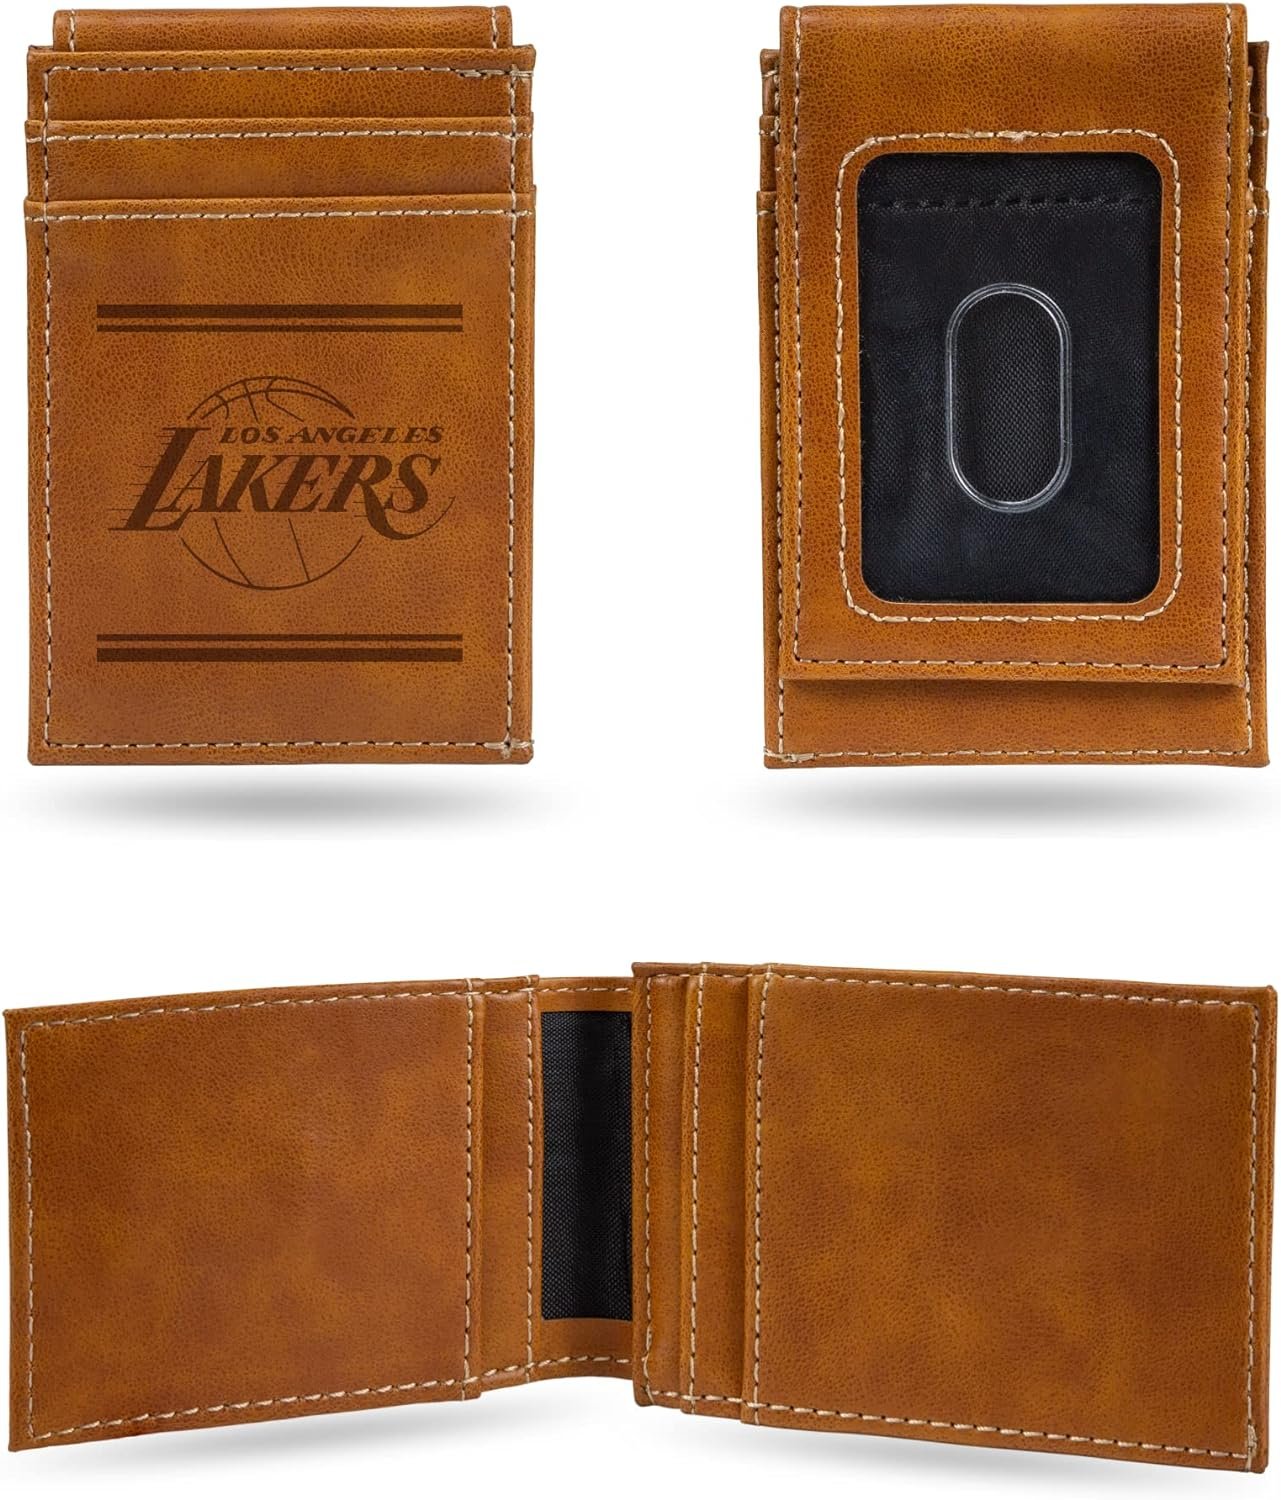 Los Angeles Lakers Premium Brown Leather Wallet, Front Pocket Magnetic Money Clip, Laser Engraved, Vegan